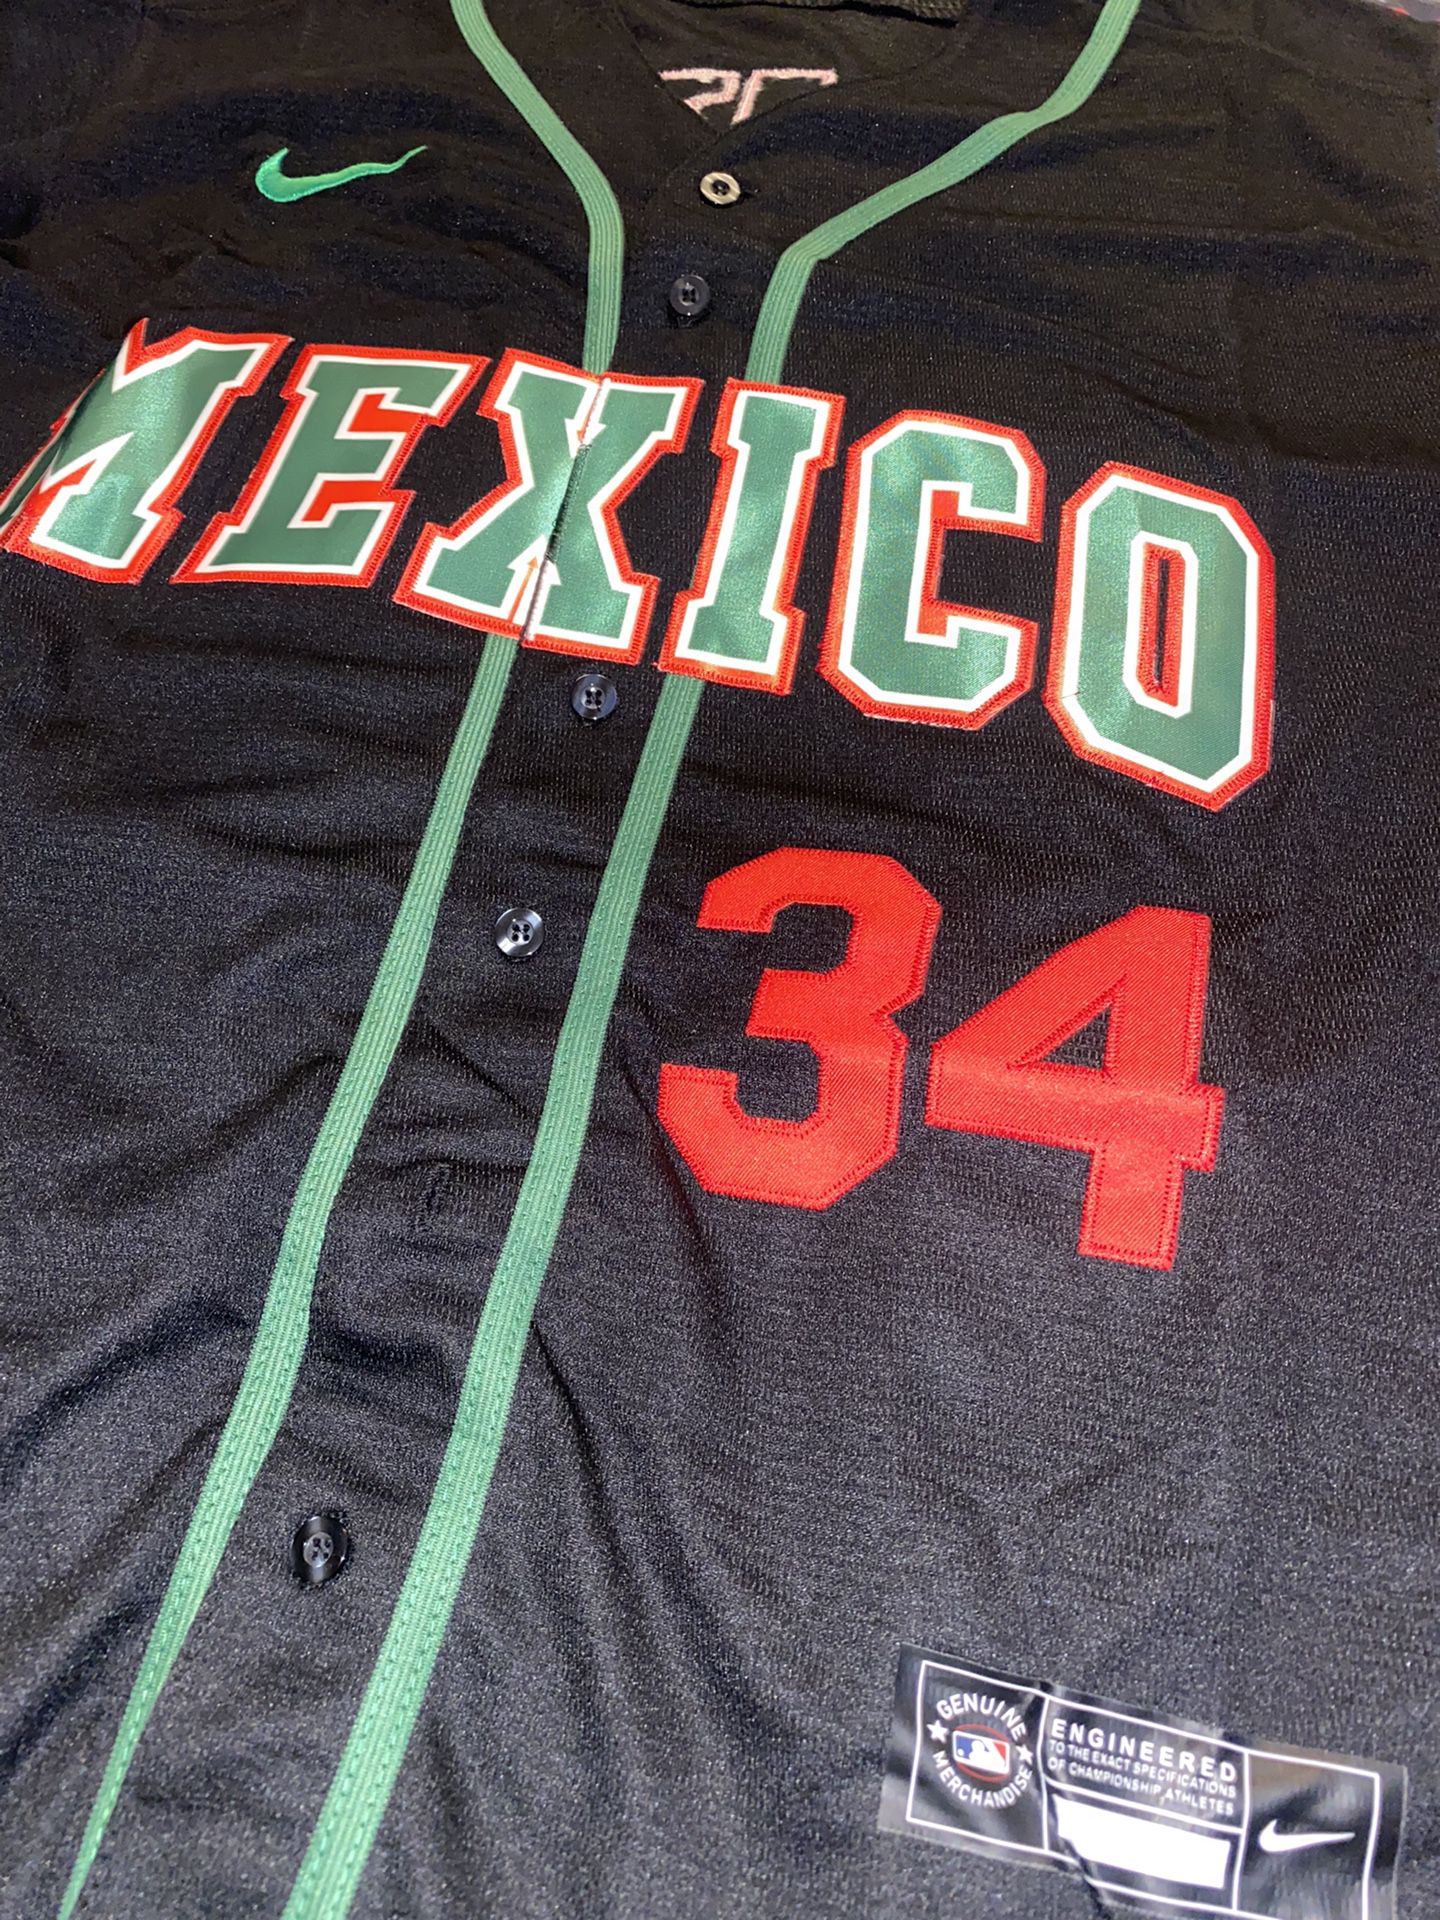 Mexico Fernando Valenzuela Black Baseball Jersey #34 for Sale in